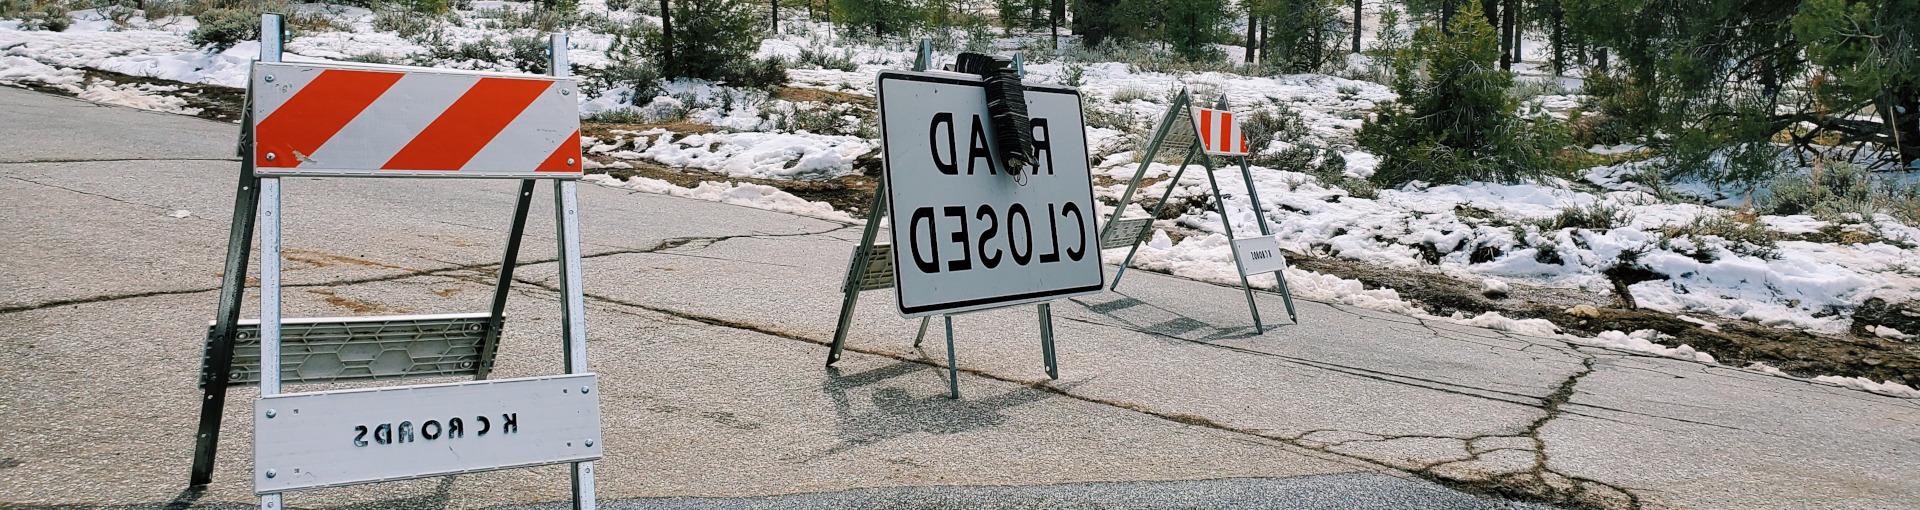 Public Works Road Closure Signs